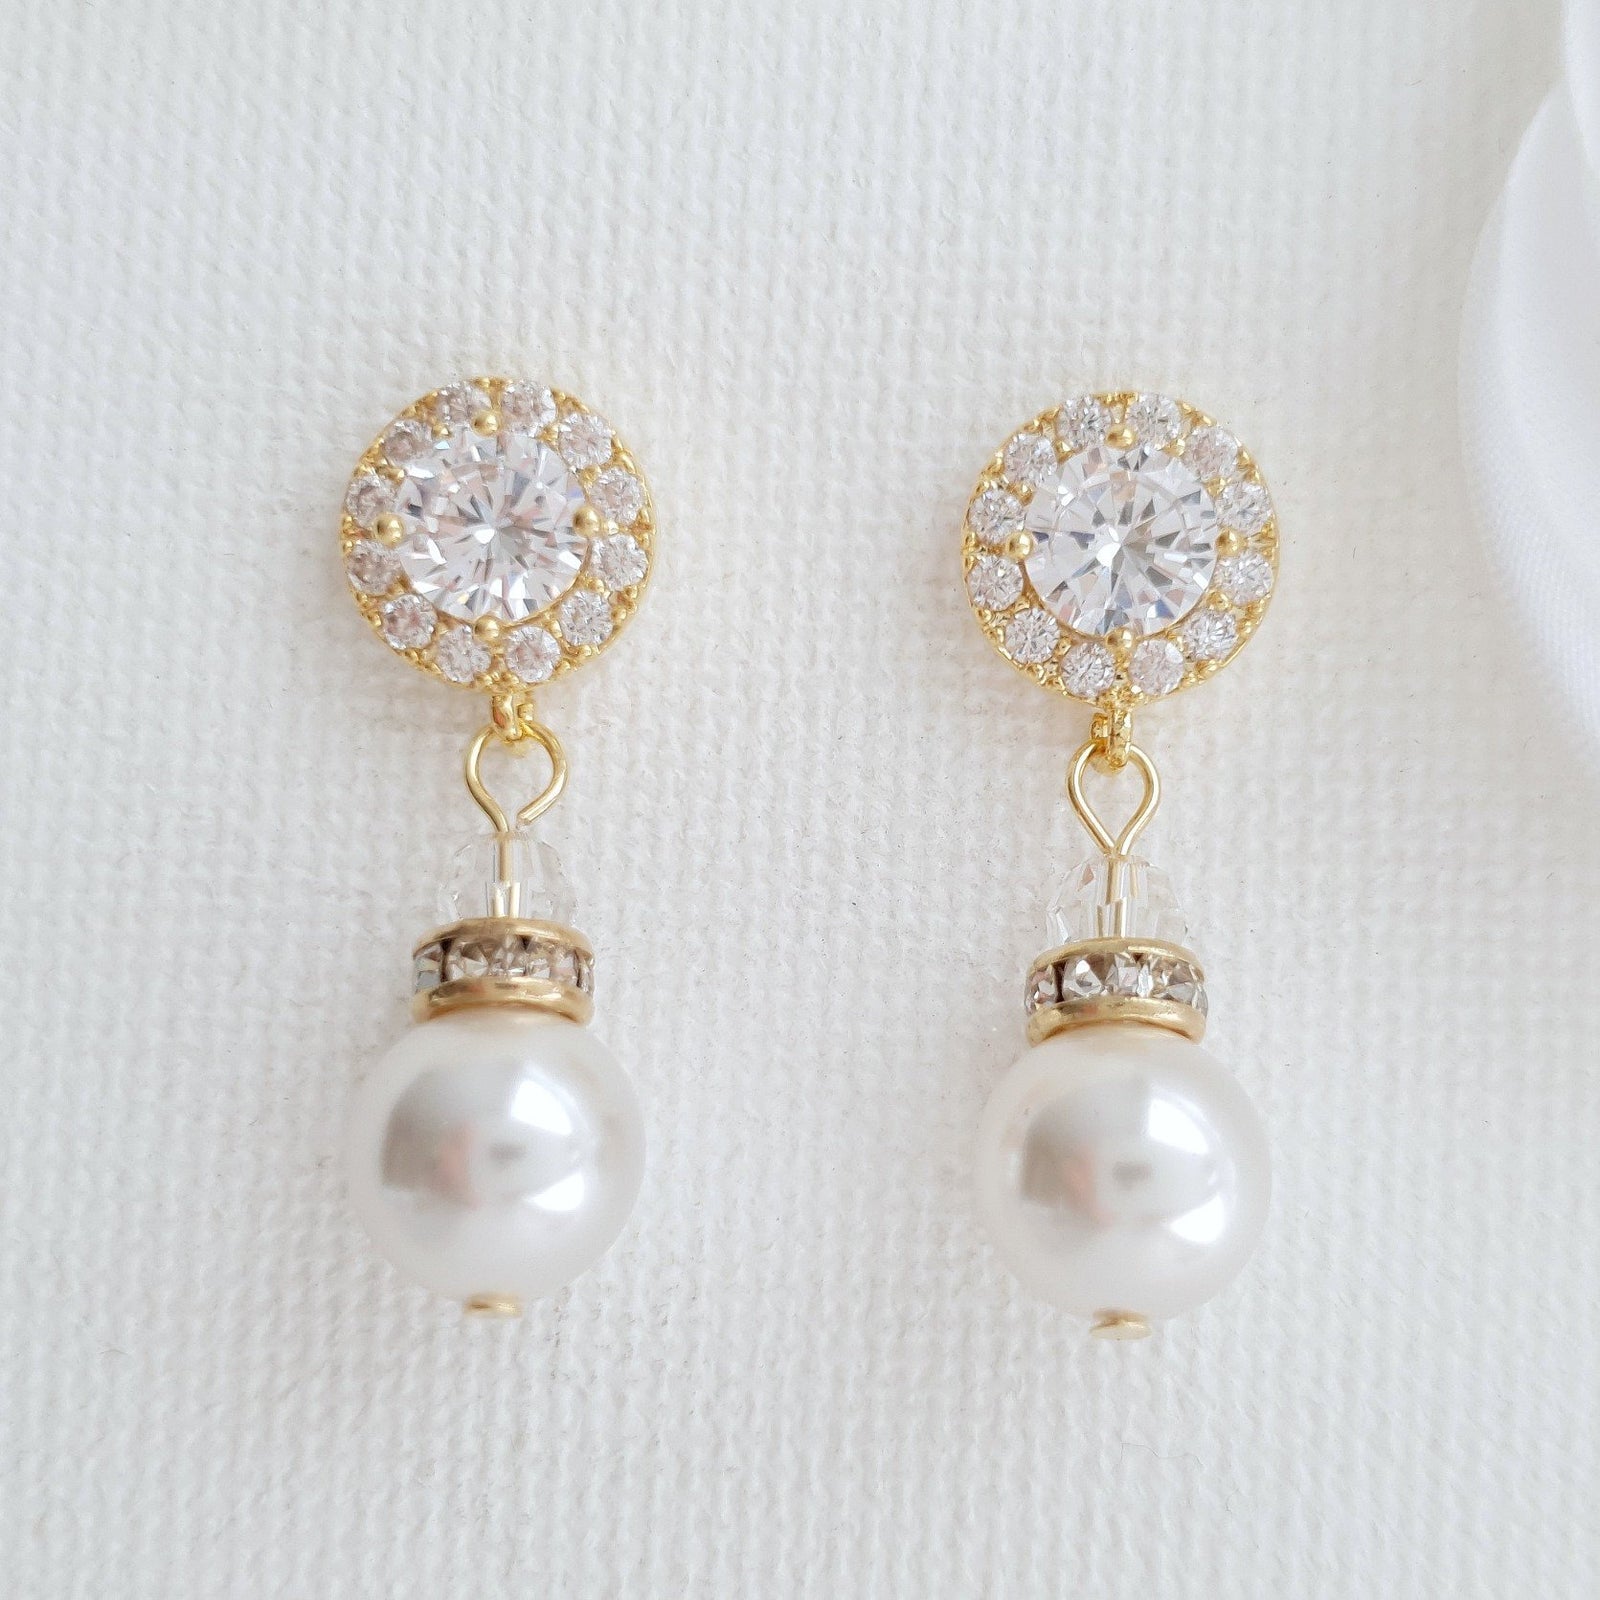 Bridal Earrings Wedding Rose Gold Earrings Clear Cubic Zirconia Posts ...